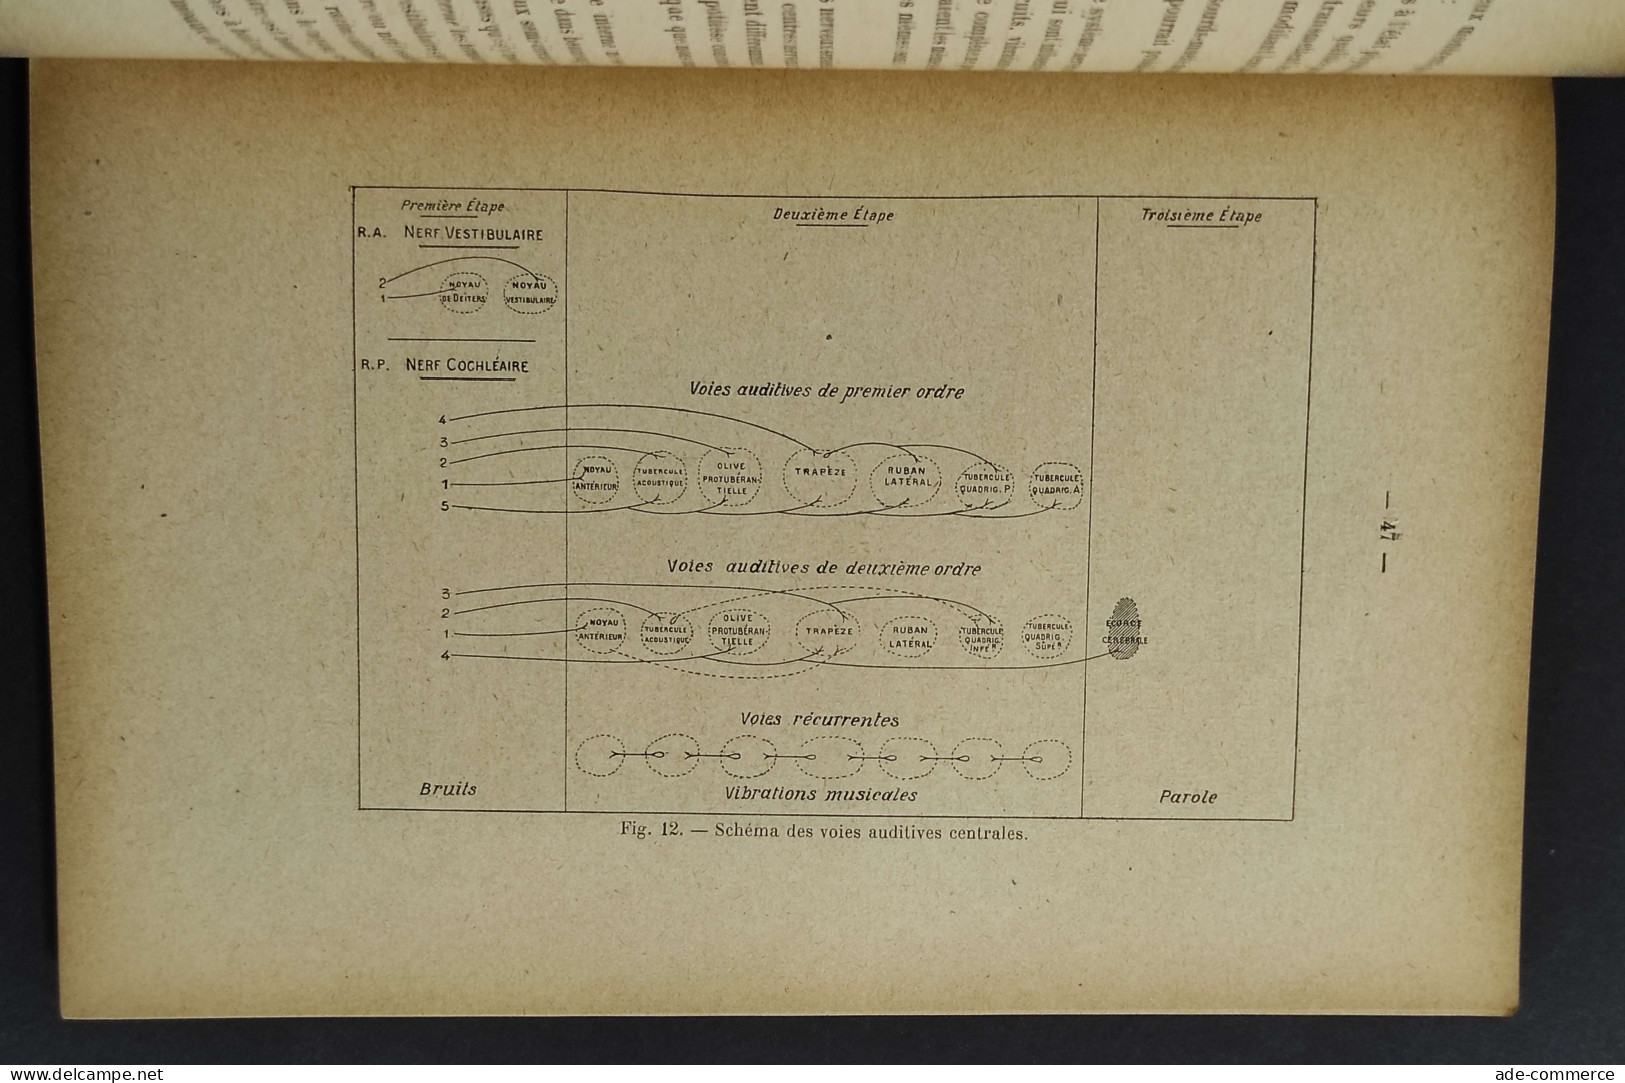 L'Audition Et Ses Variantions - Marage -Ed. Gauthier-Villars - 1923 - Mathematics & Physics